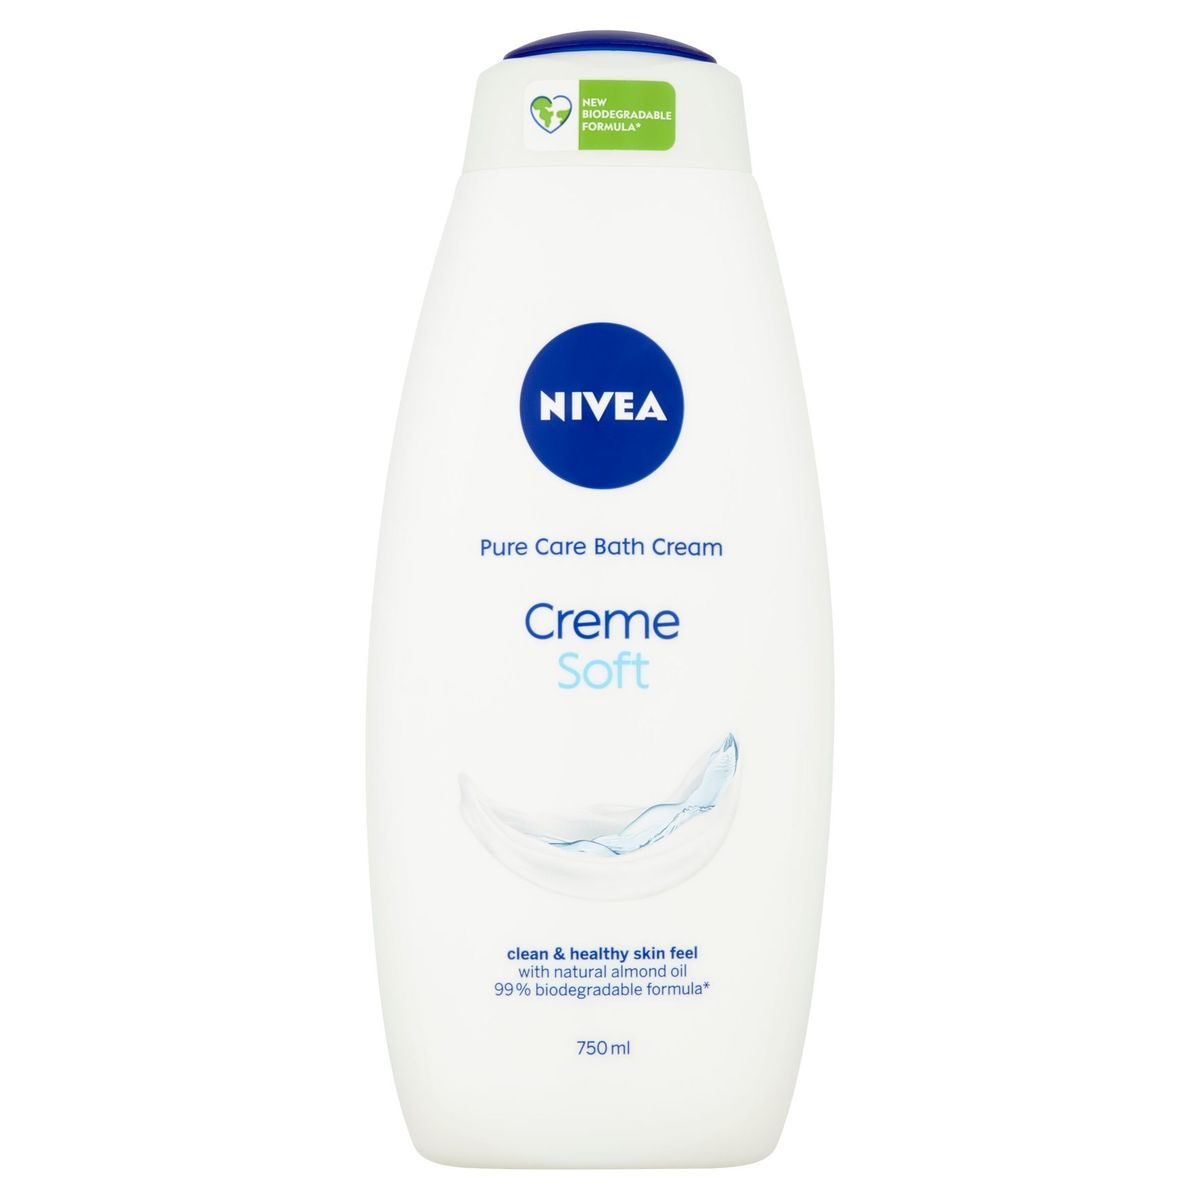 Nivea Pure Care Bath Cream Creme Soft 750 ml